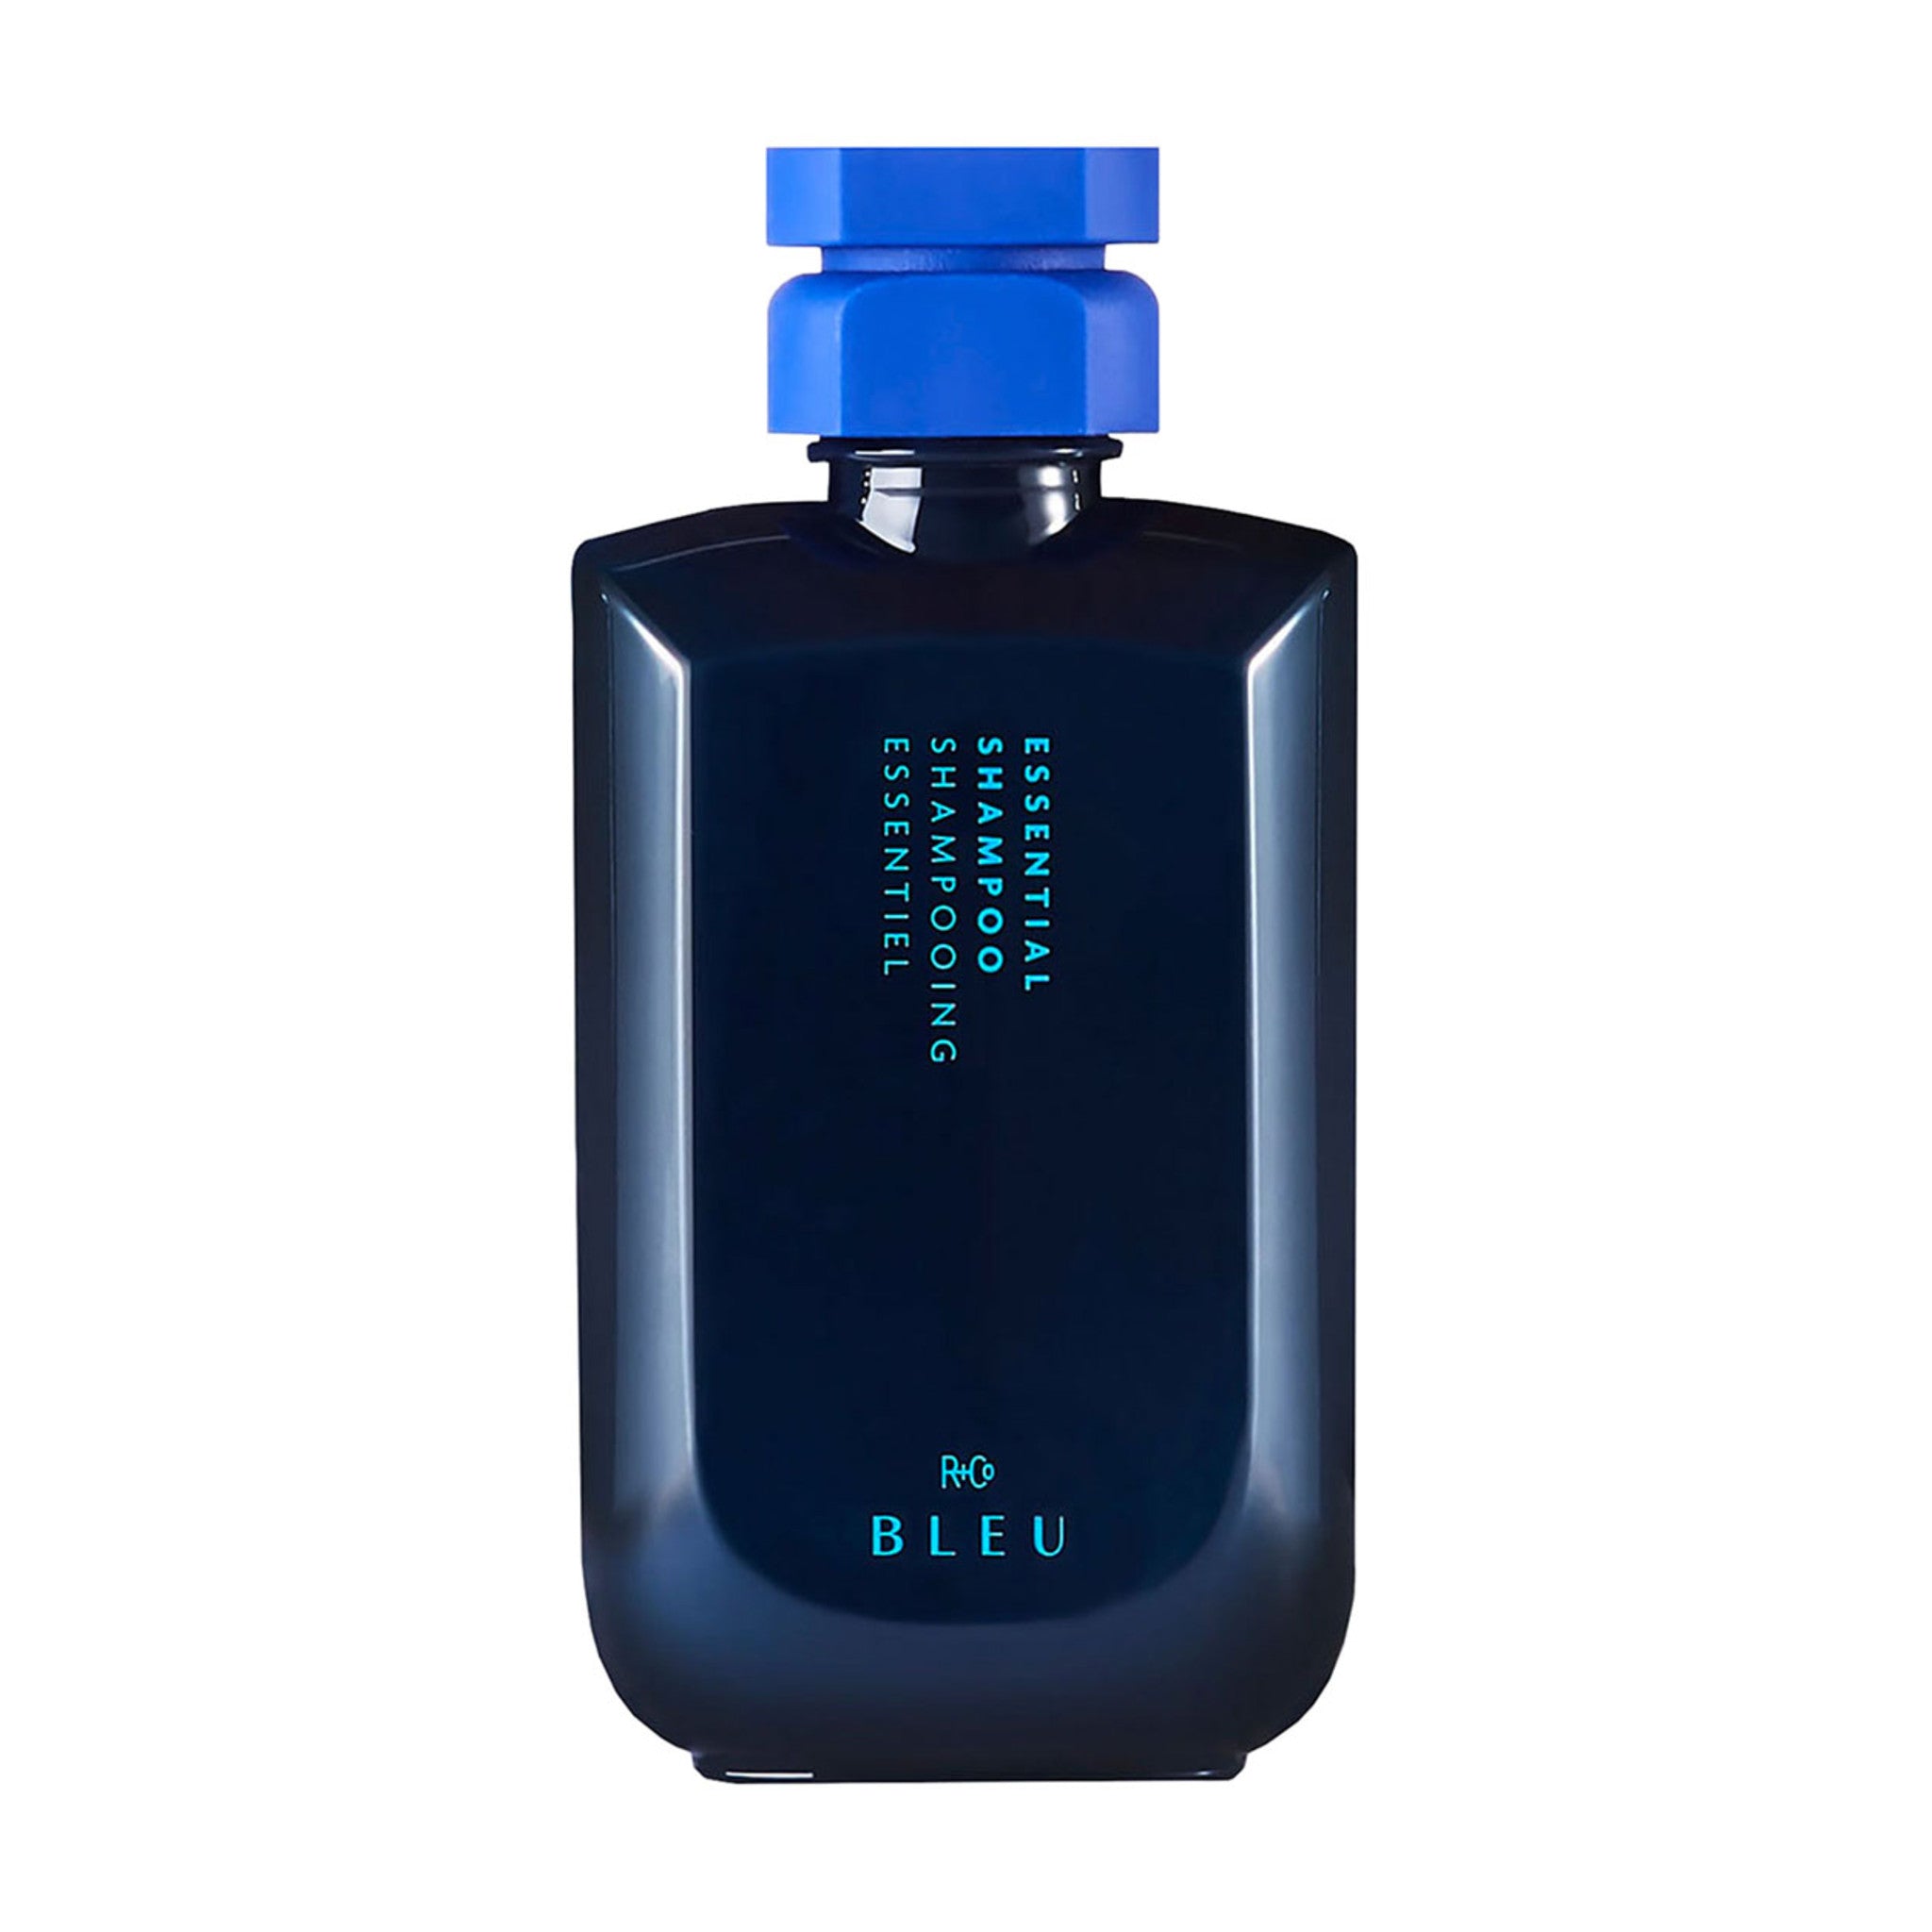 R+Co Bleu Essential Shampoo Size variant: 8.5 fl oz main image.